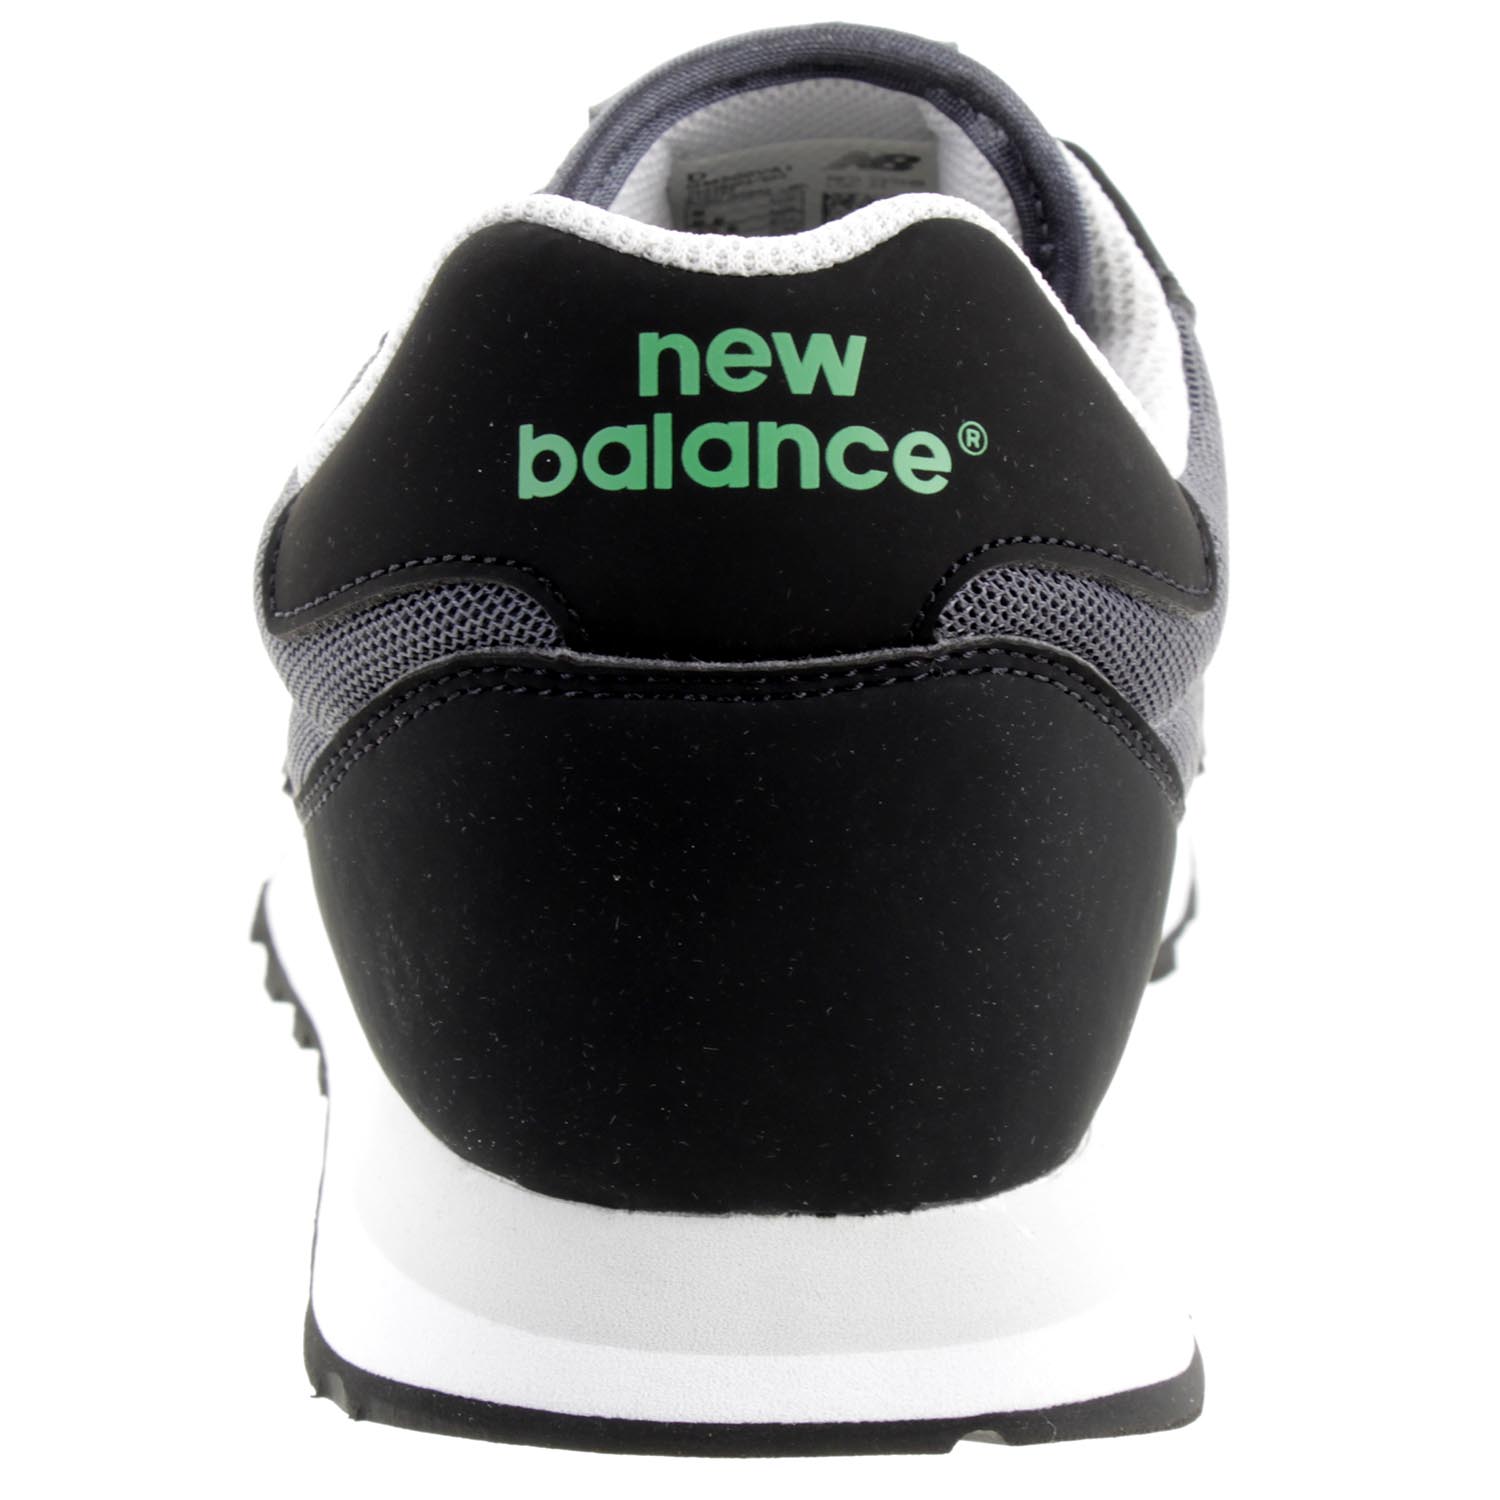 New Balance GM500 VA1 Lifestyle Sneaker Herren Turnschuhe schwarz